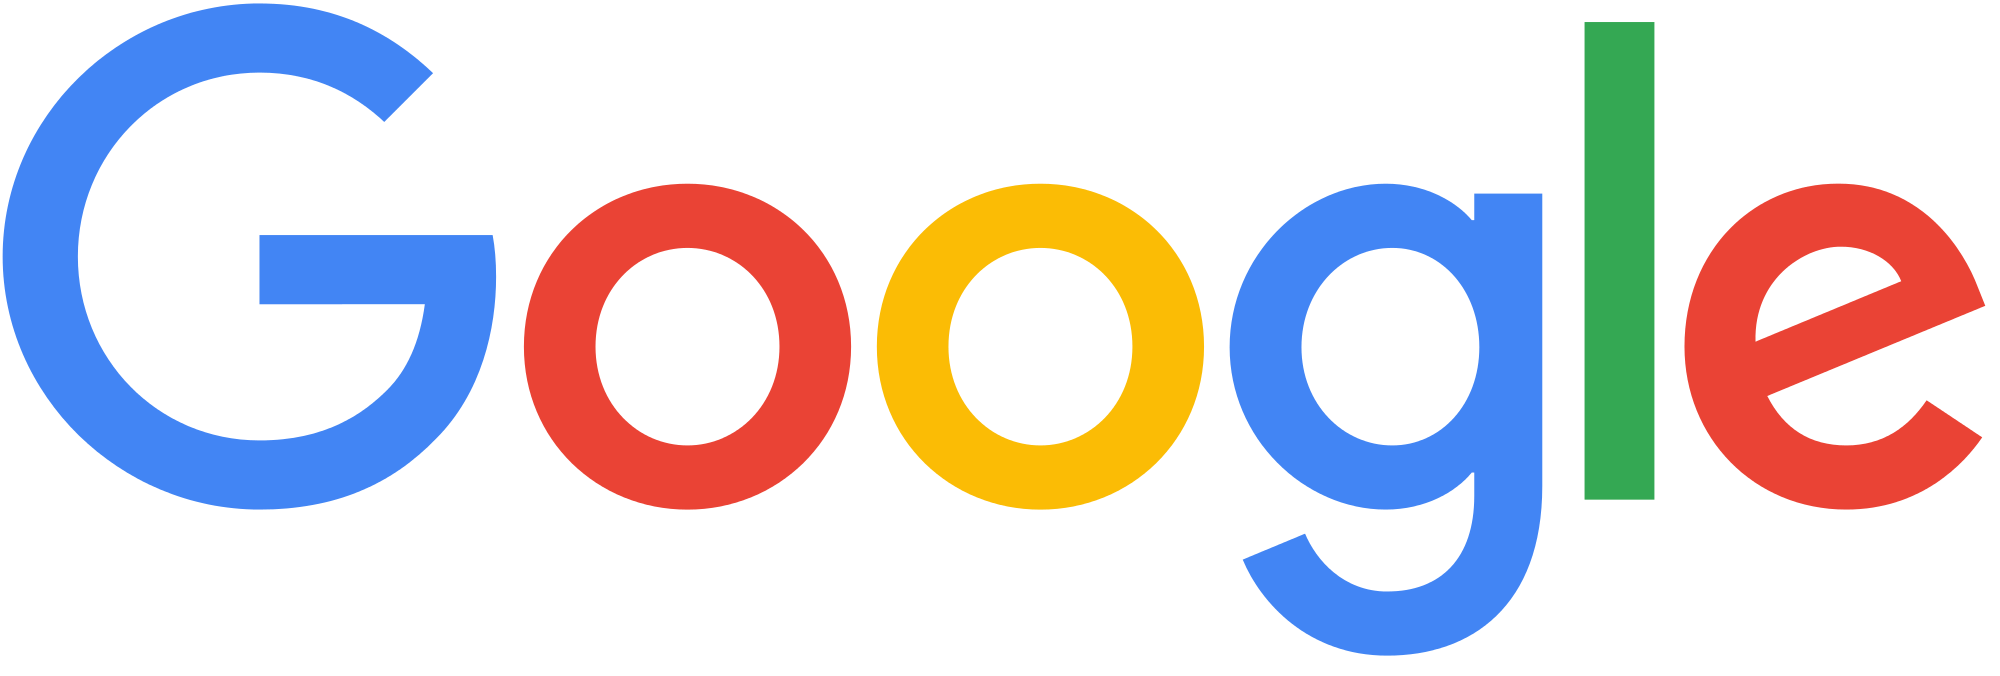 google logo no background